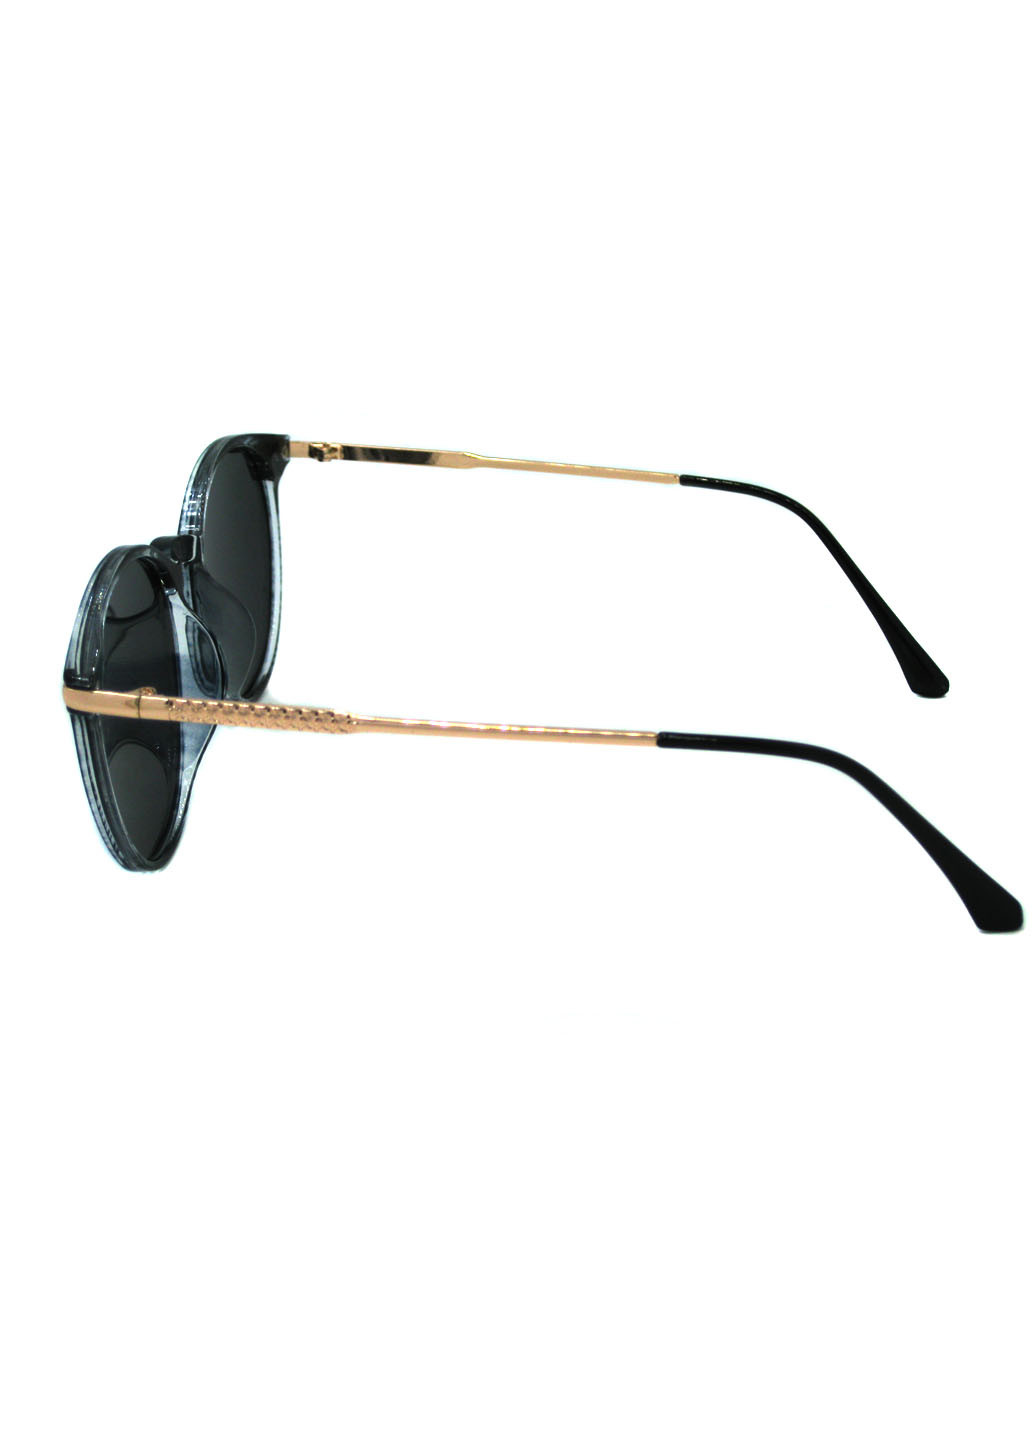 Солнцезащитные очки Boccaccio bcp245 (258845515)